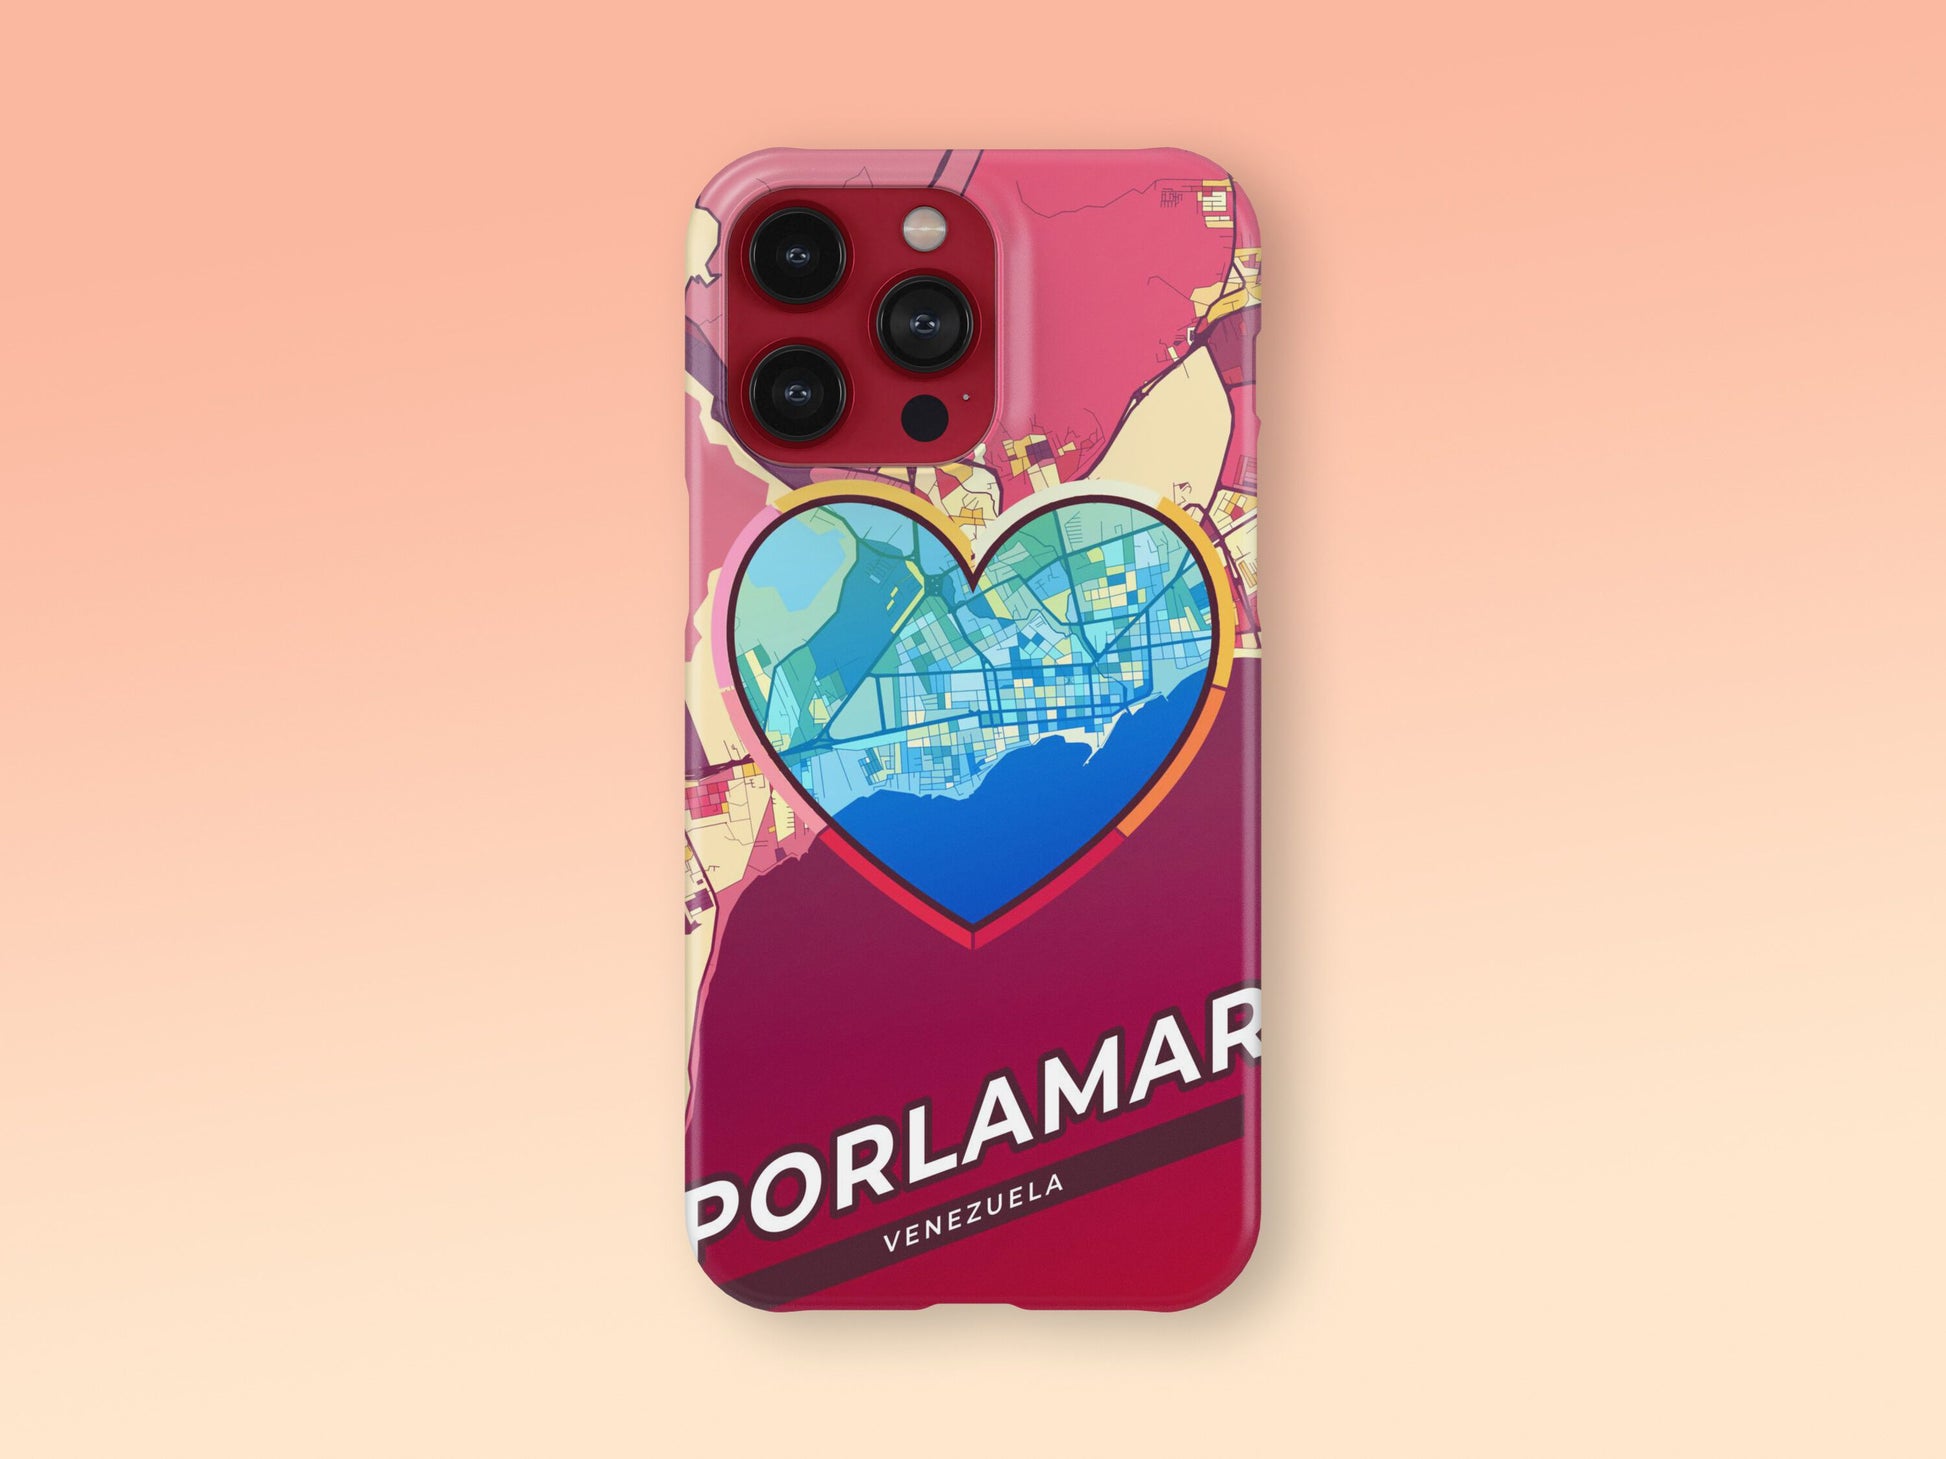 Porlamar Venezuela slim phone case with colorful icon 2